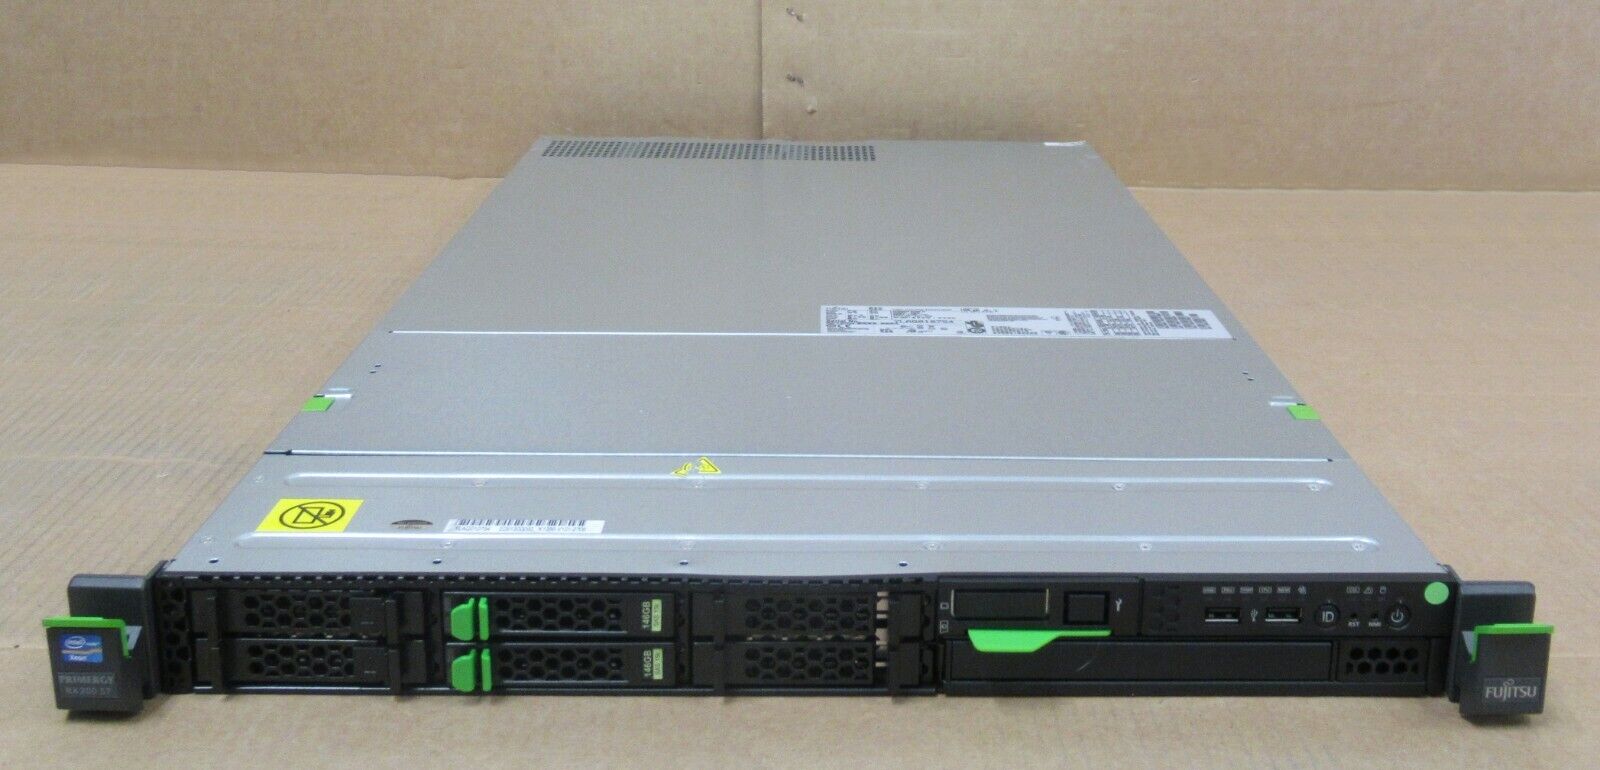 Fujitsu Primergy RX200 S7 2x E5-2620 2GHz 96GB Ram 1x 146GB HDD 1U Rack Server